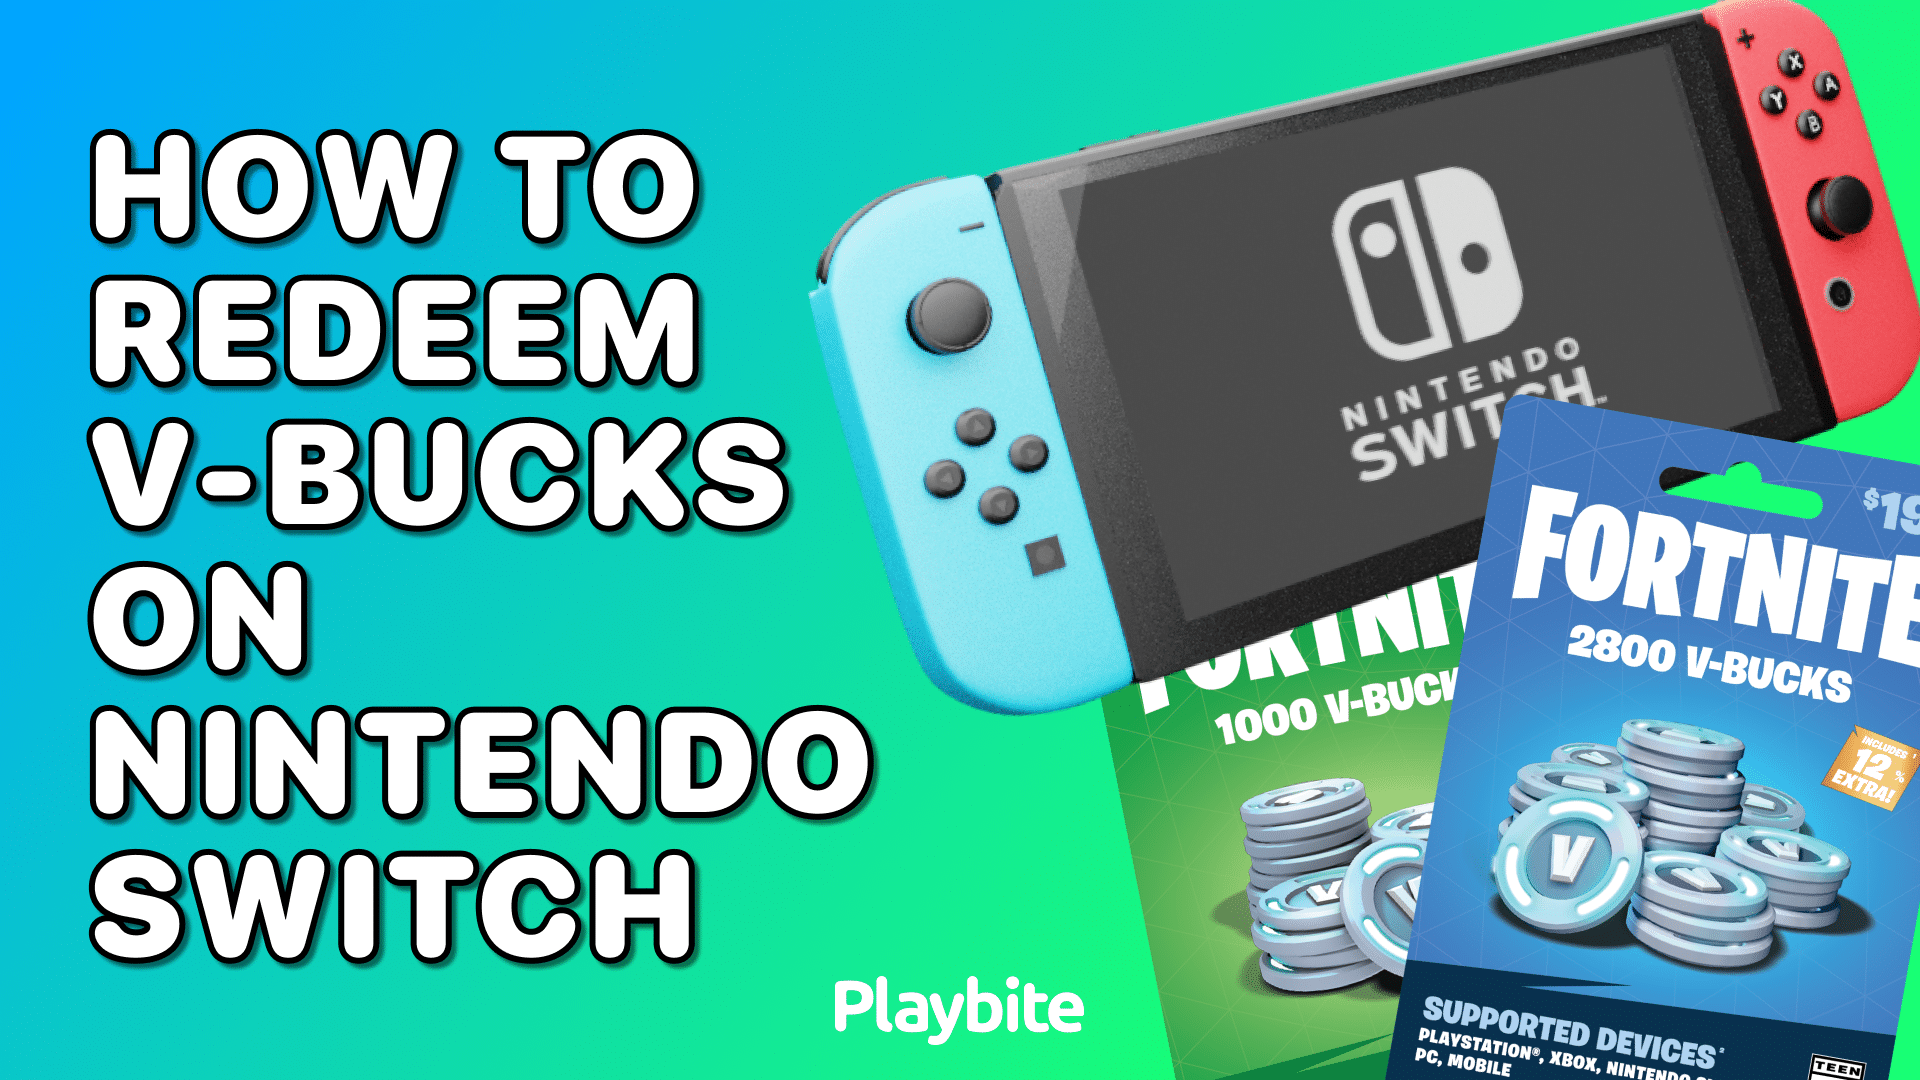 V-Bucks/Fortnite/Nintendo Switch/Nintendo